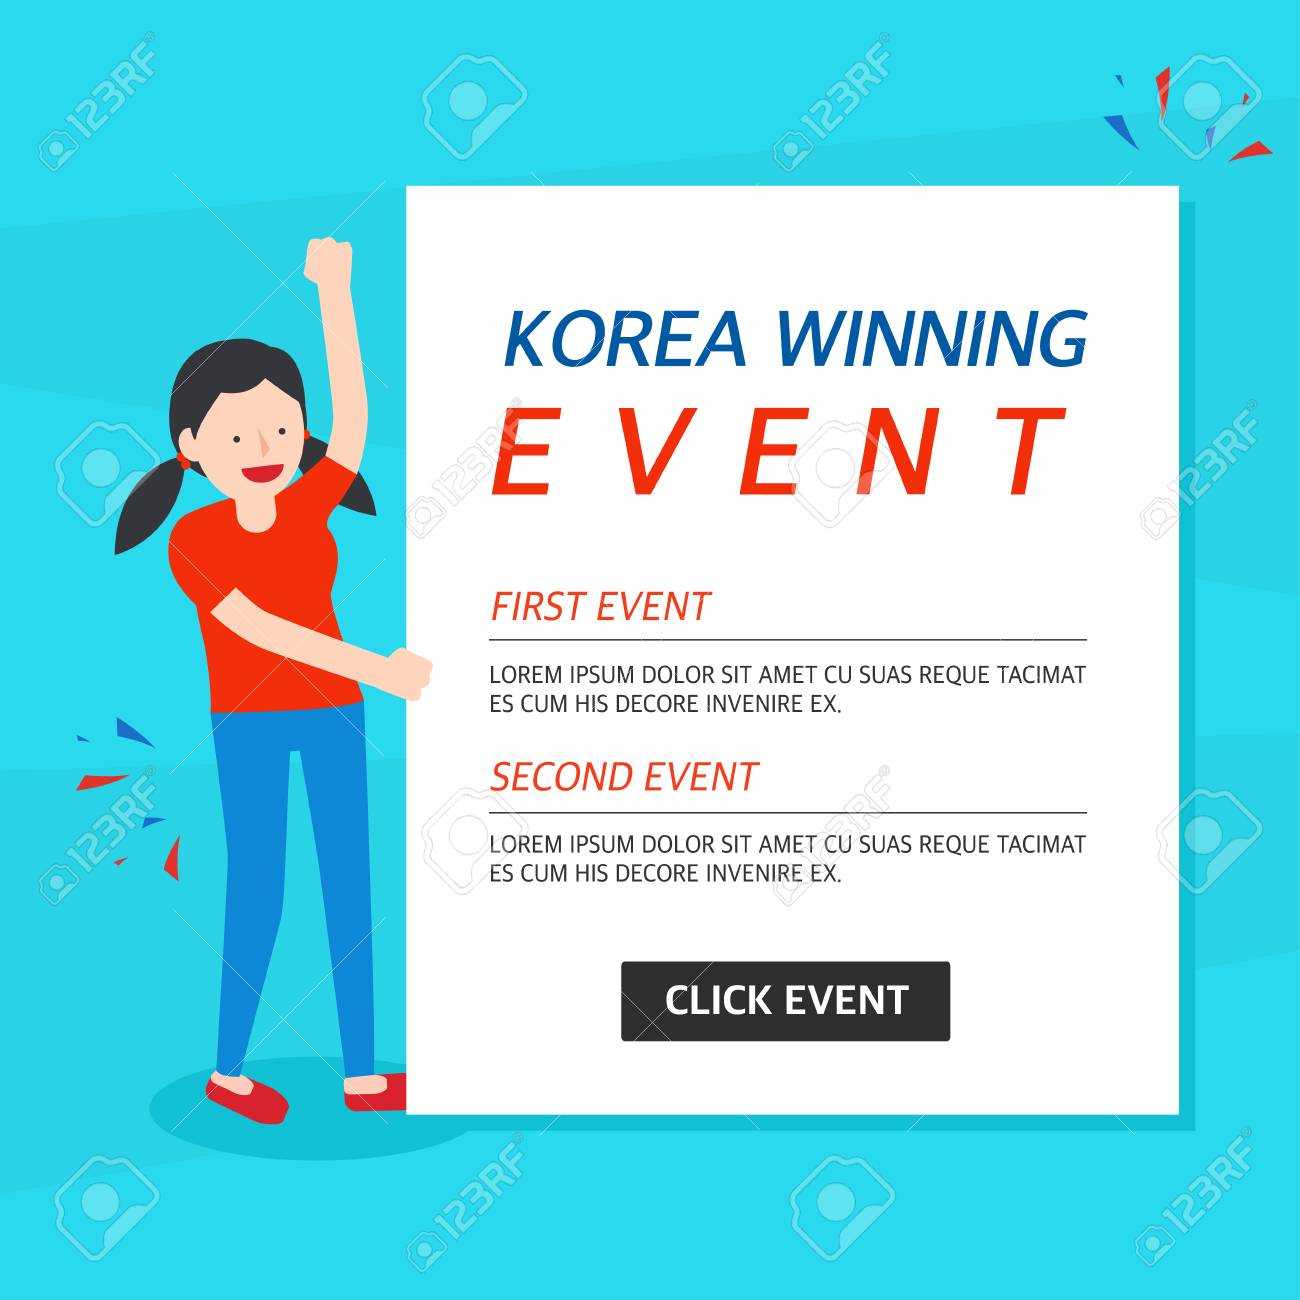 Korea Winning Event Banner Template For Event Banner Template